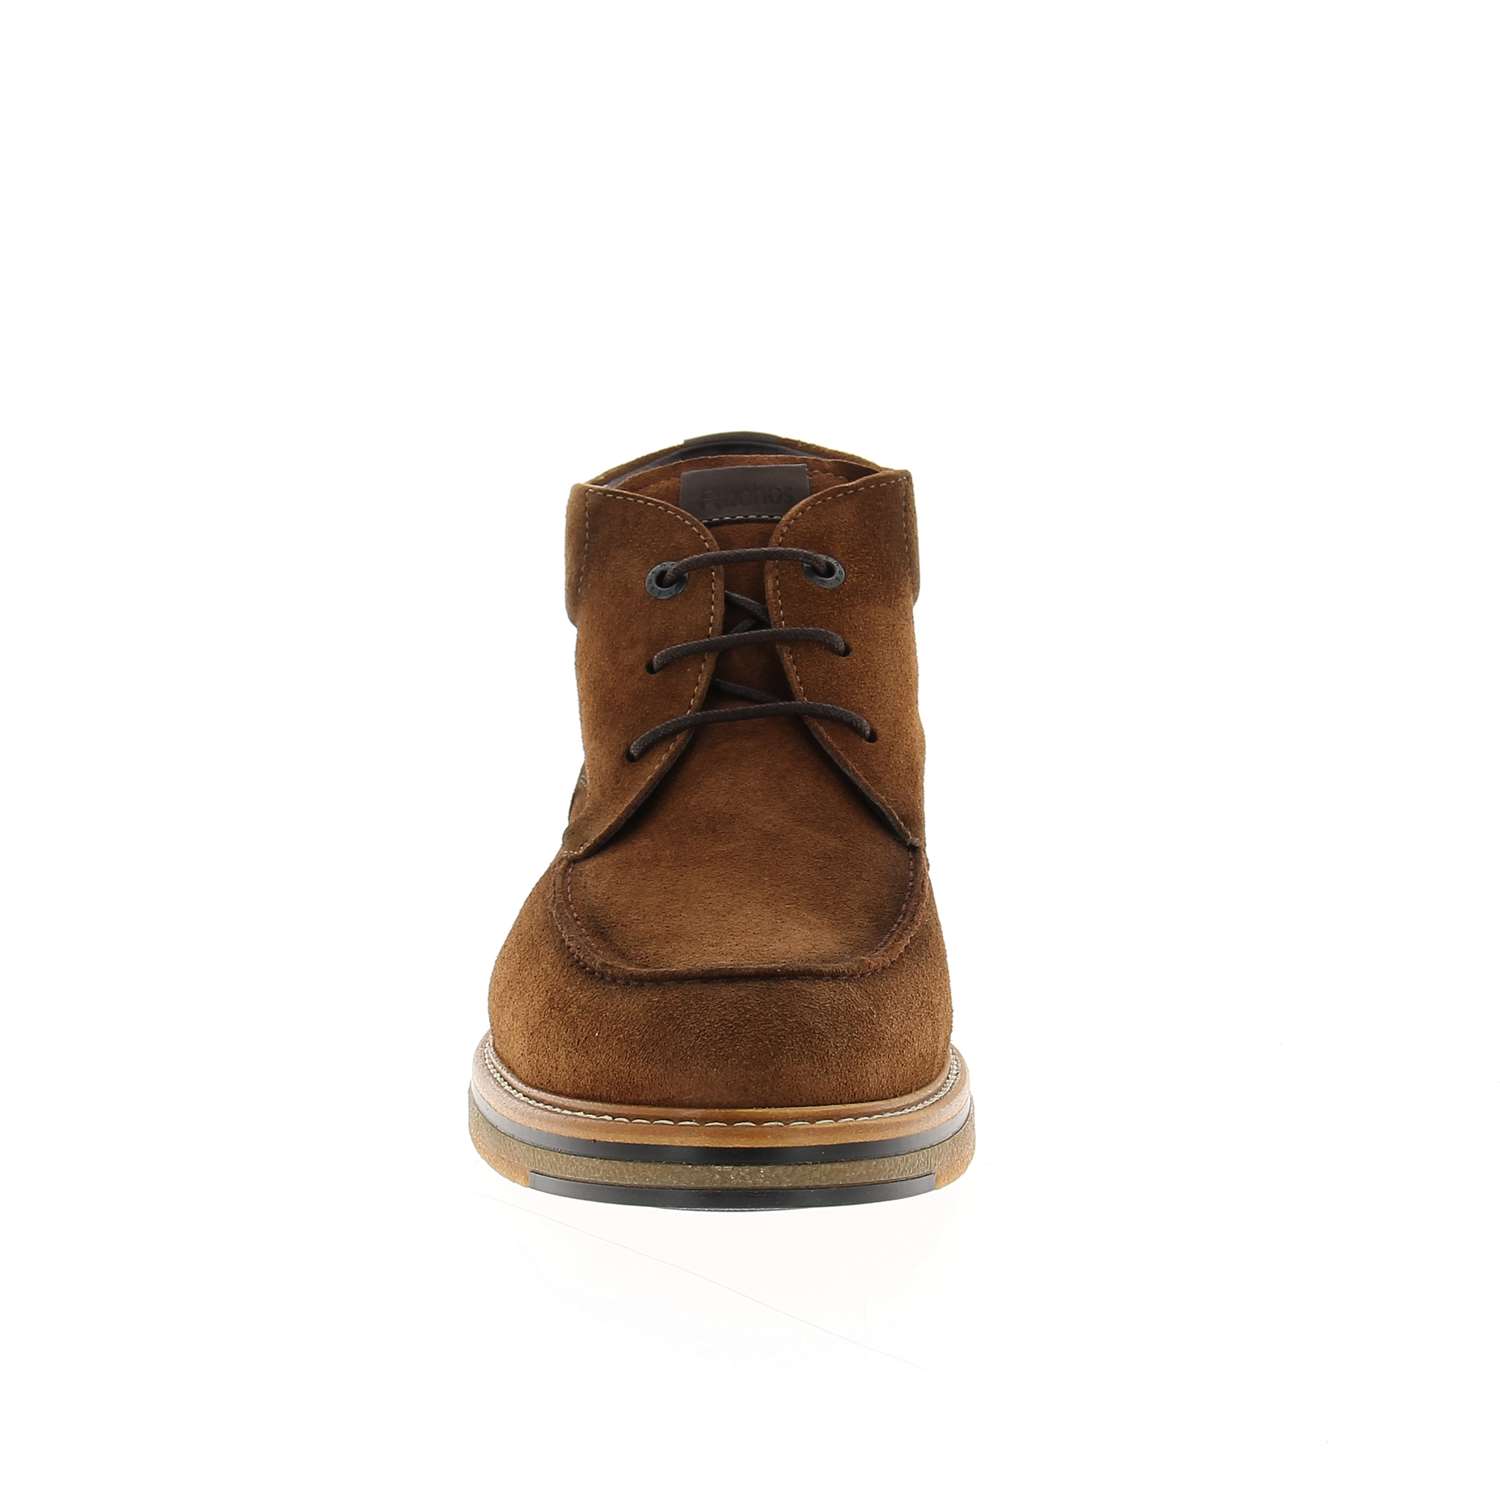 03 - KASPER - FLUCHOS - Boots et bottines - Croûte de cuir